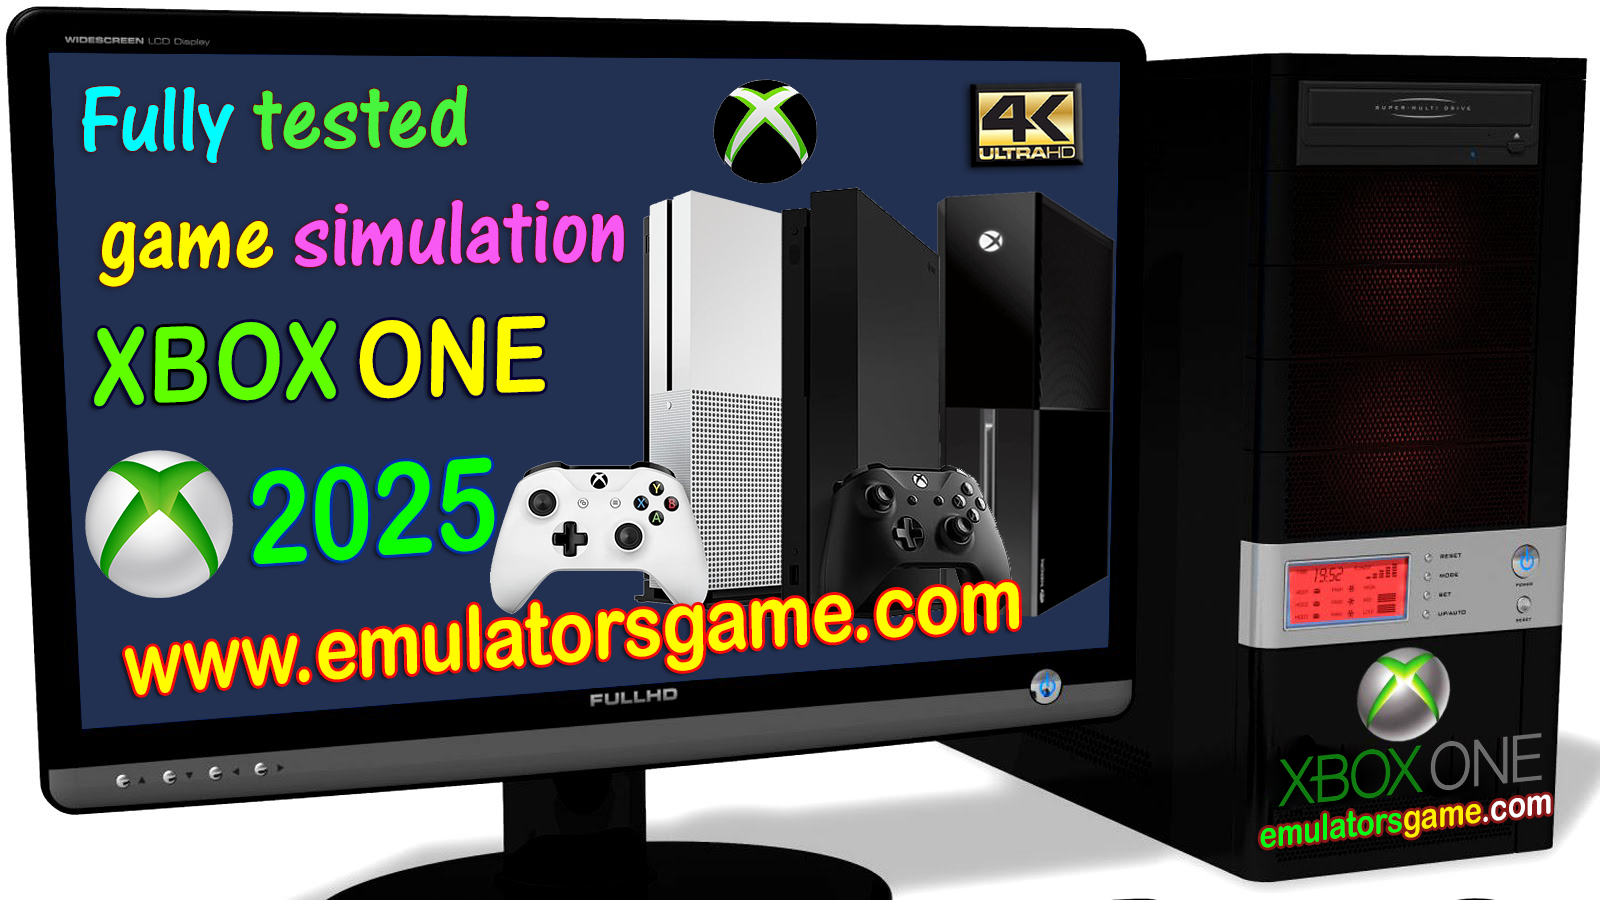 download xbox 360 emulator